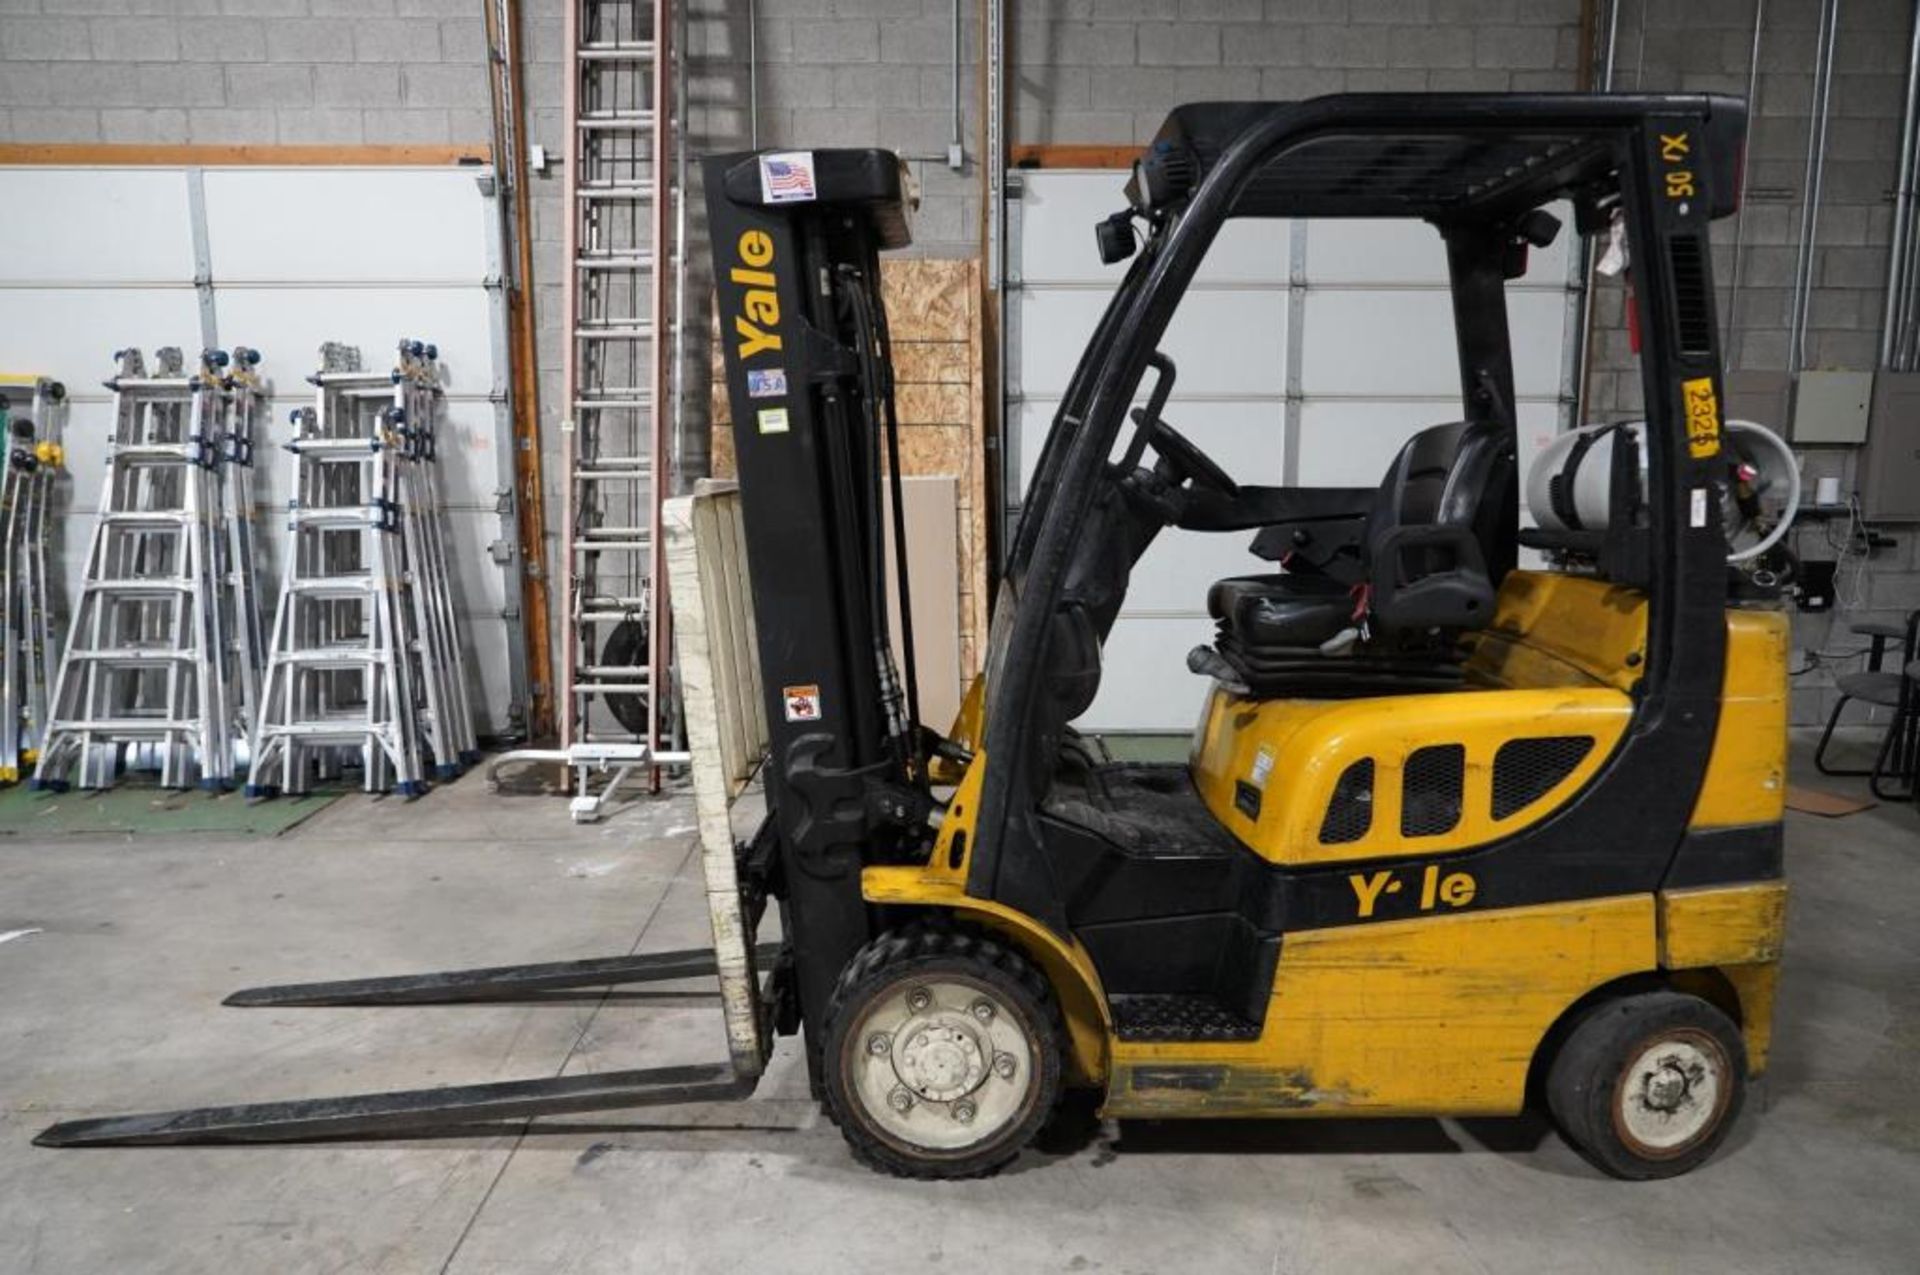 Yale 5,000 lb. Capacity Forklift